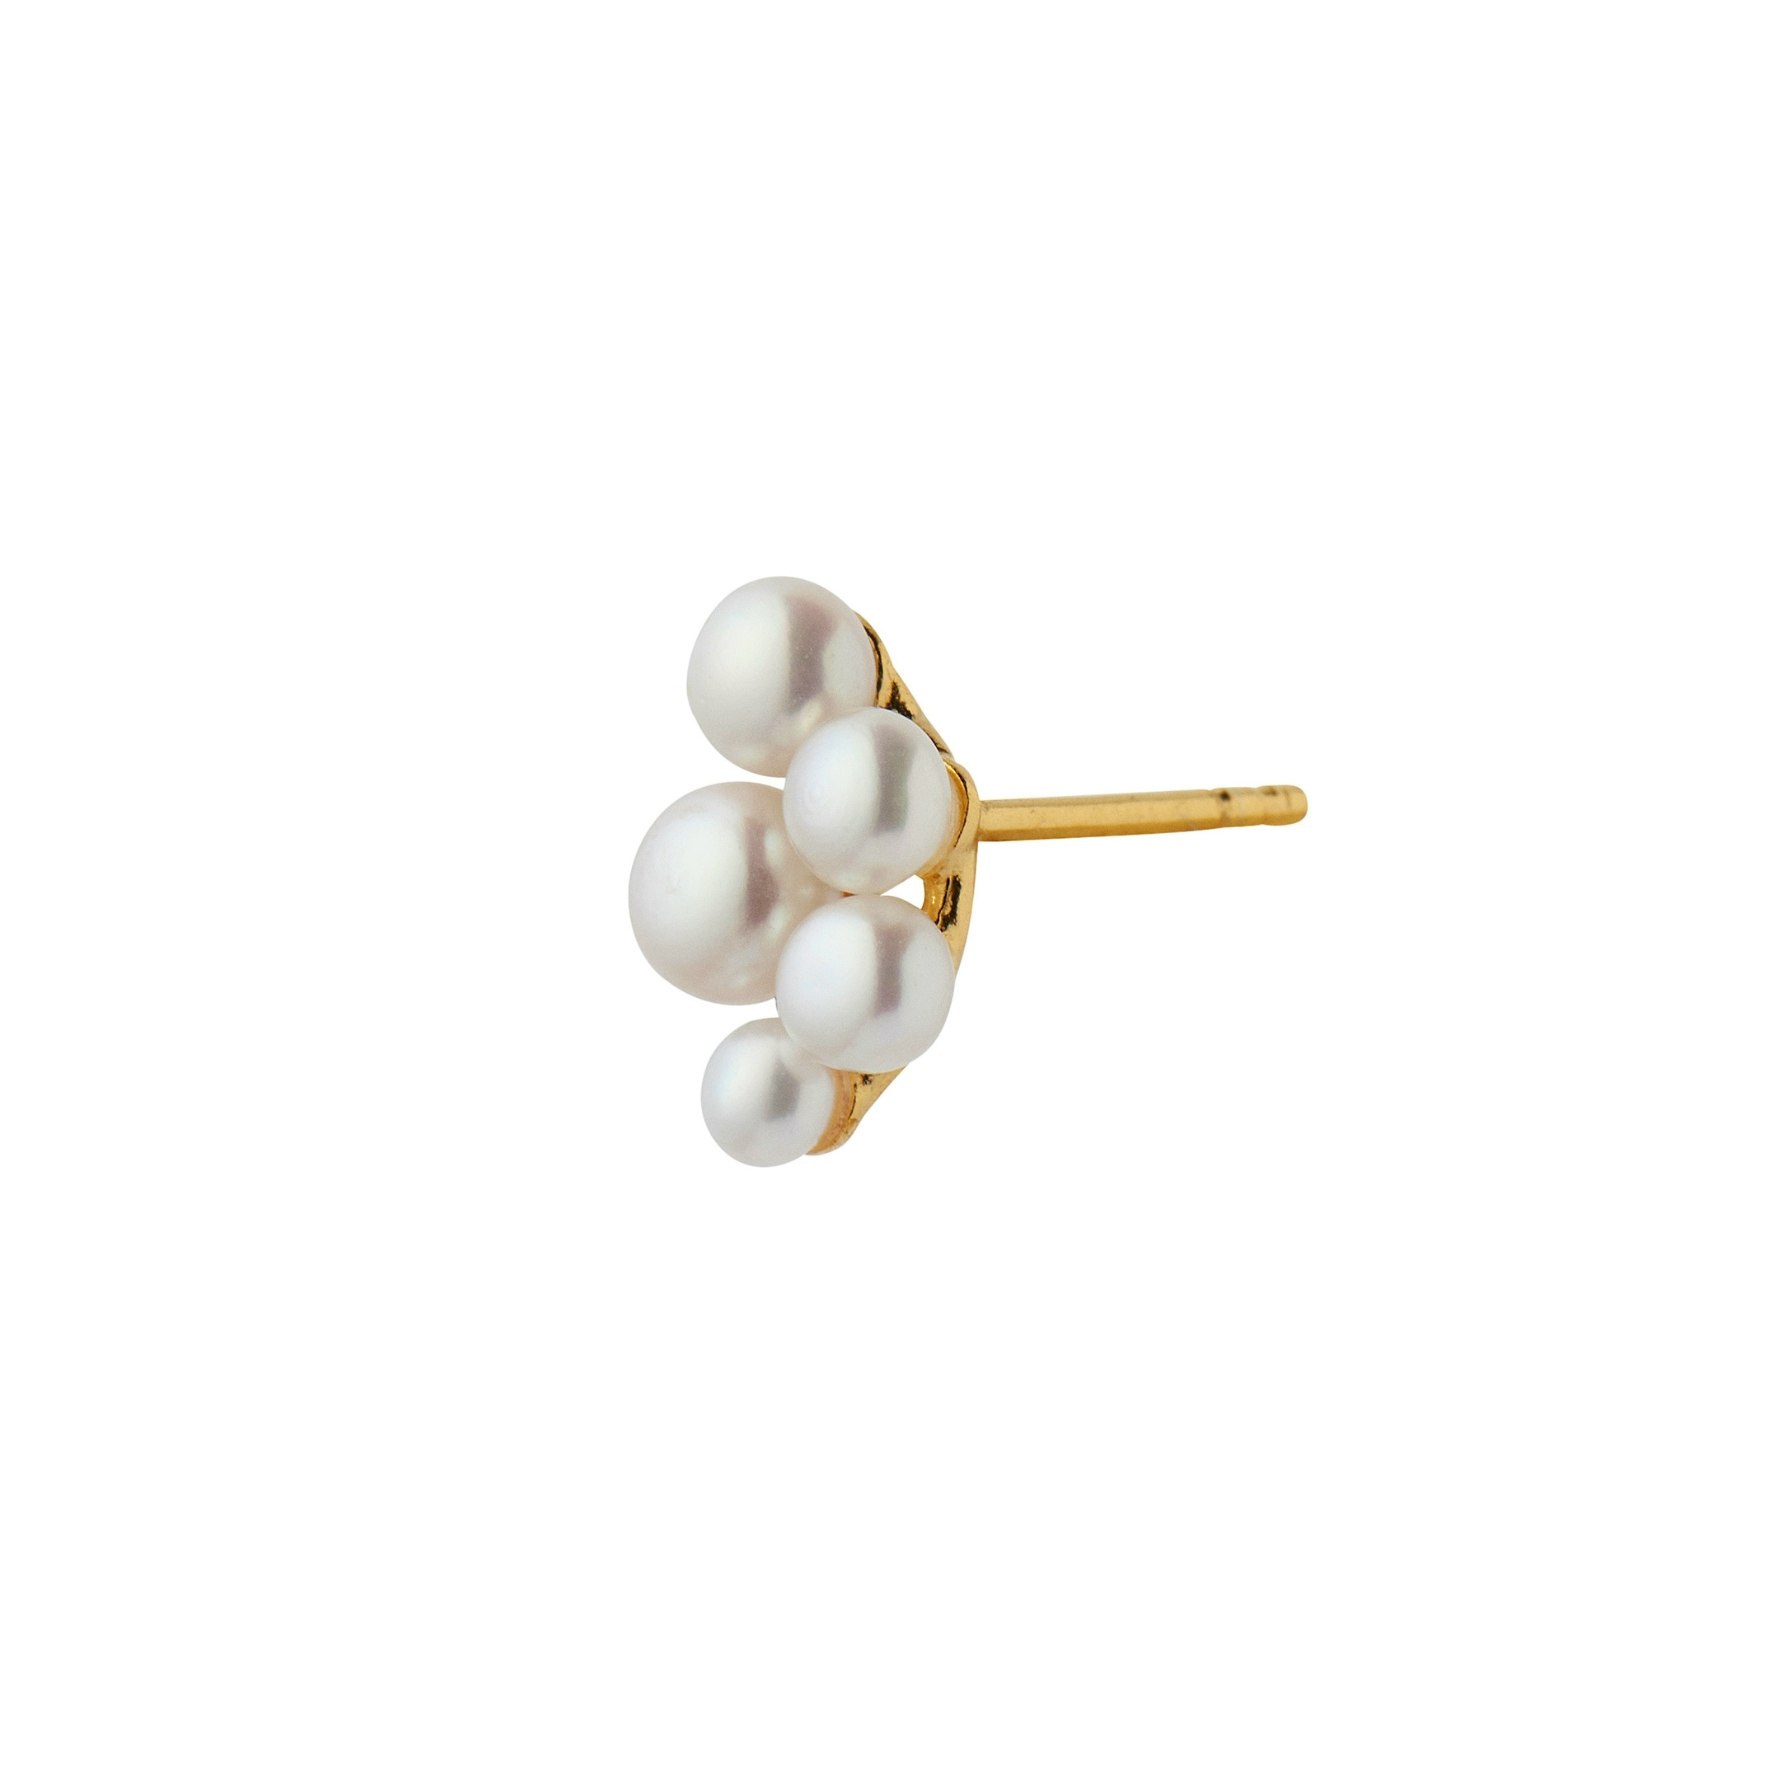 Bloom Berries Earring från STINE A Jewelry i Förgyllt-Silver Sterling 925